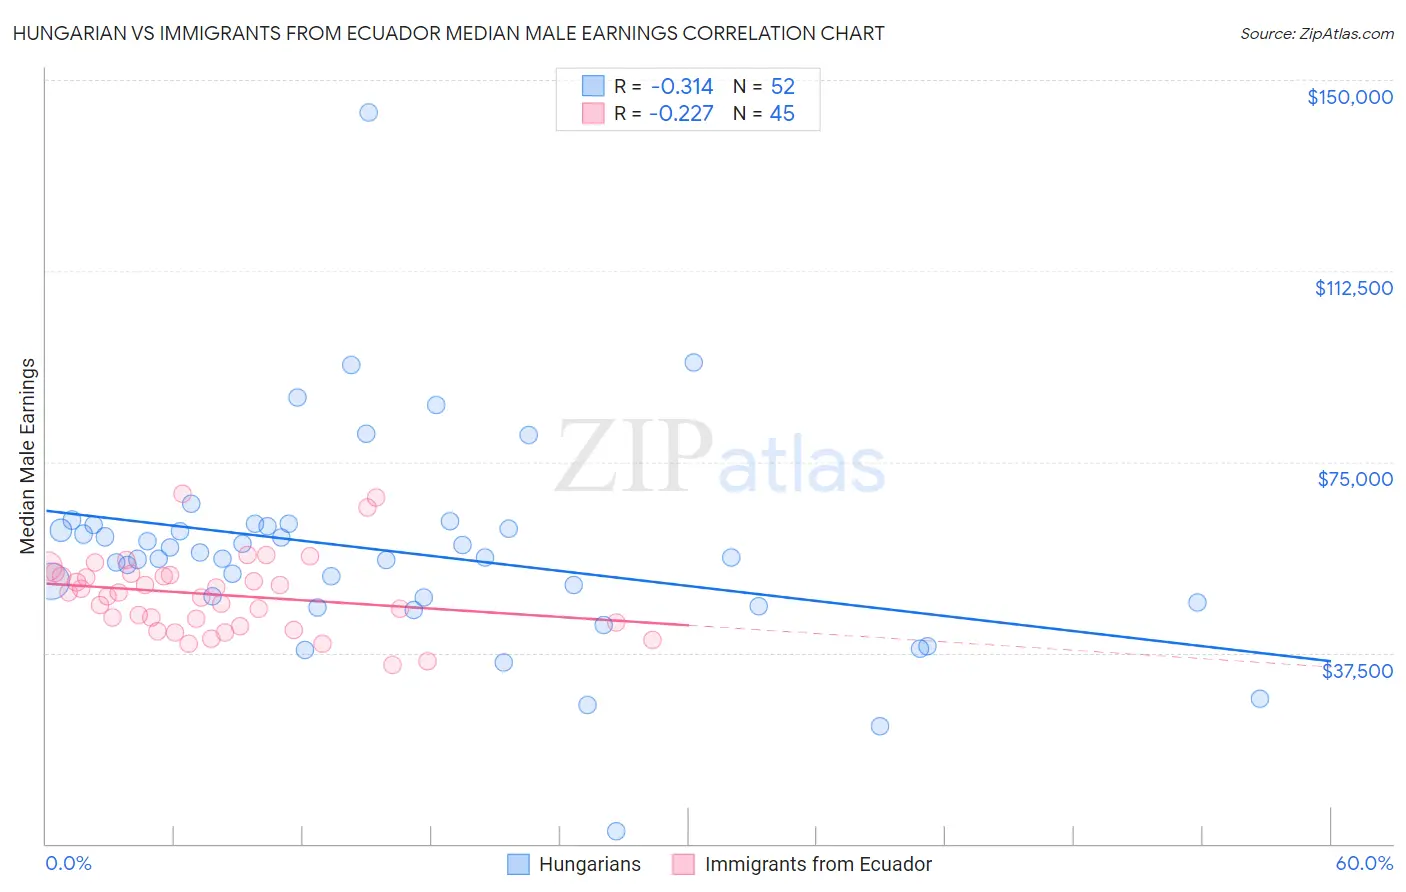 Hungarian vs Immigrants from Ecuador Median Male Earnings